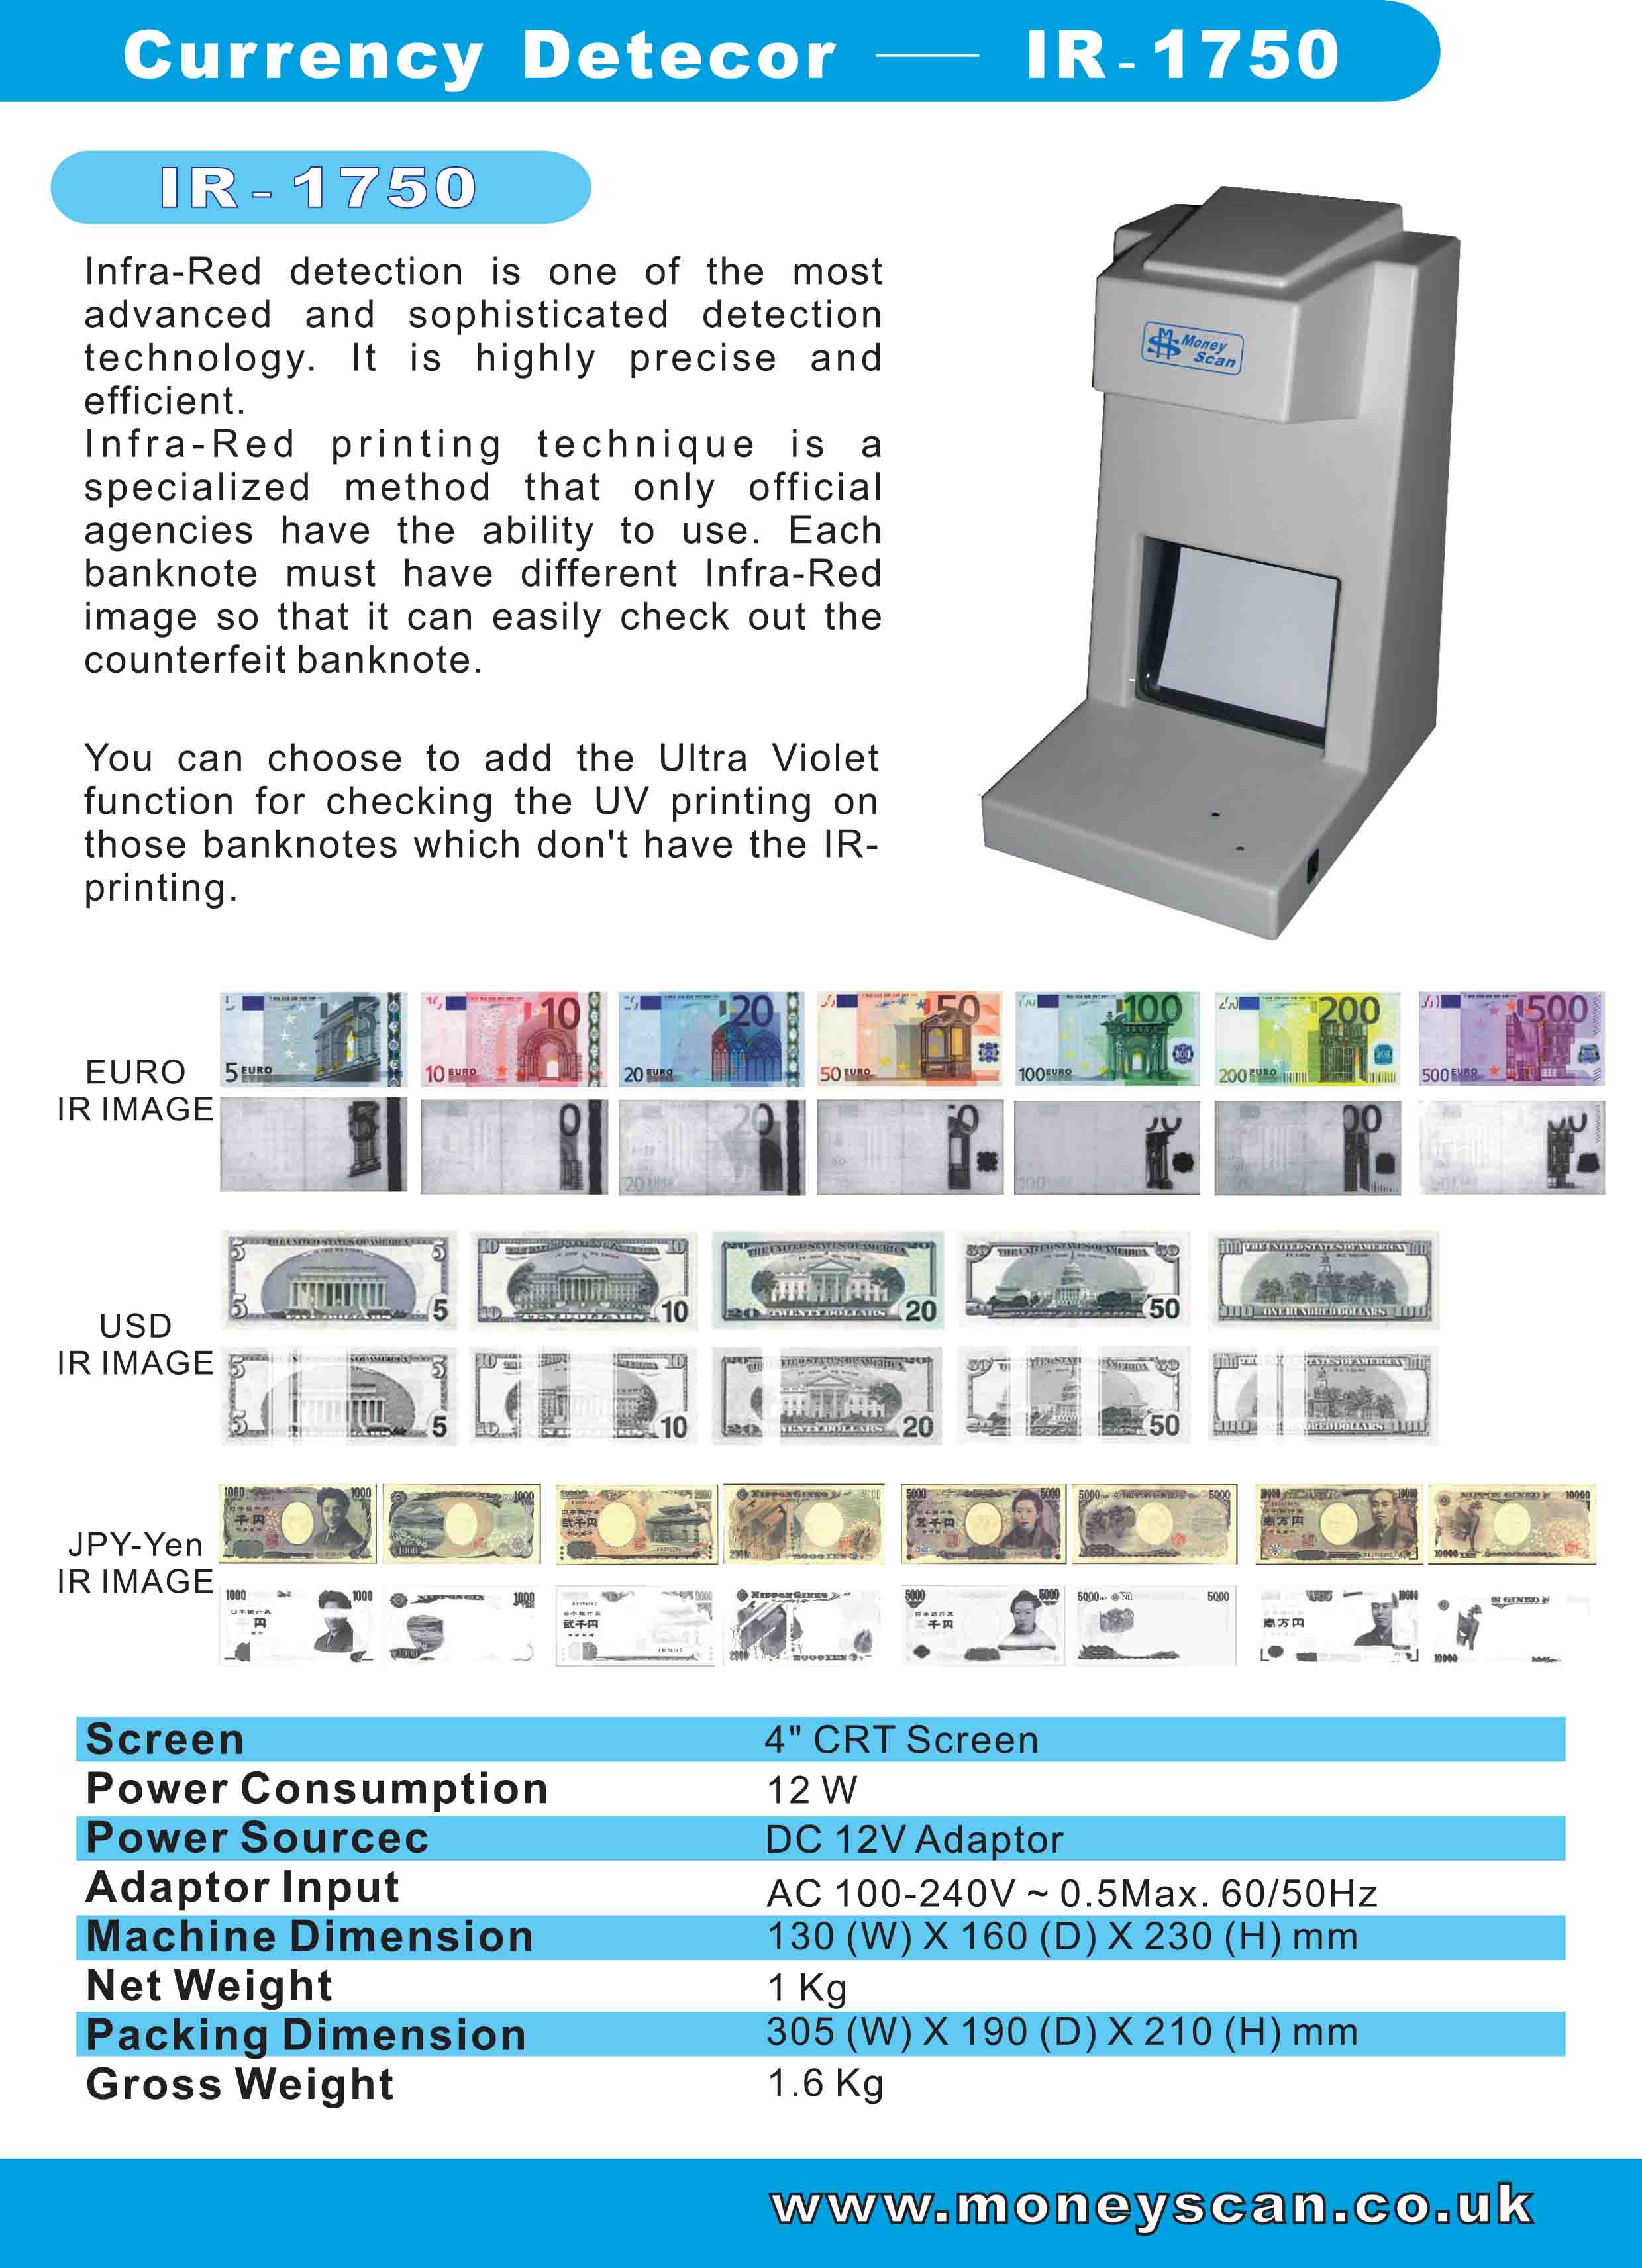 Money Scan IR-1750.cdr